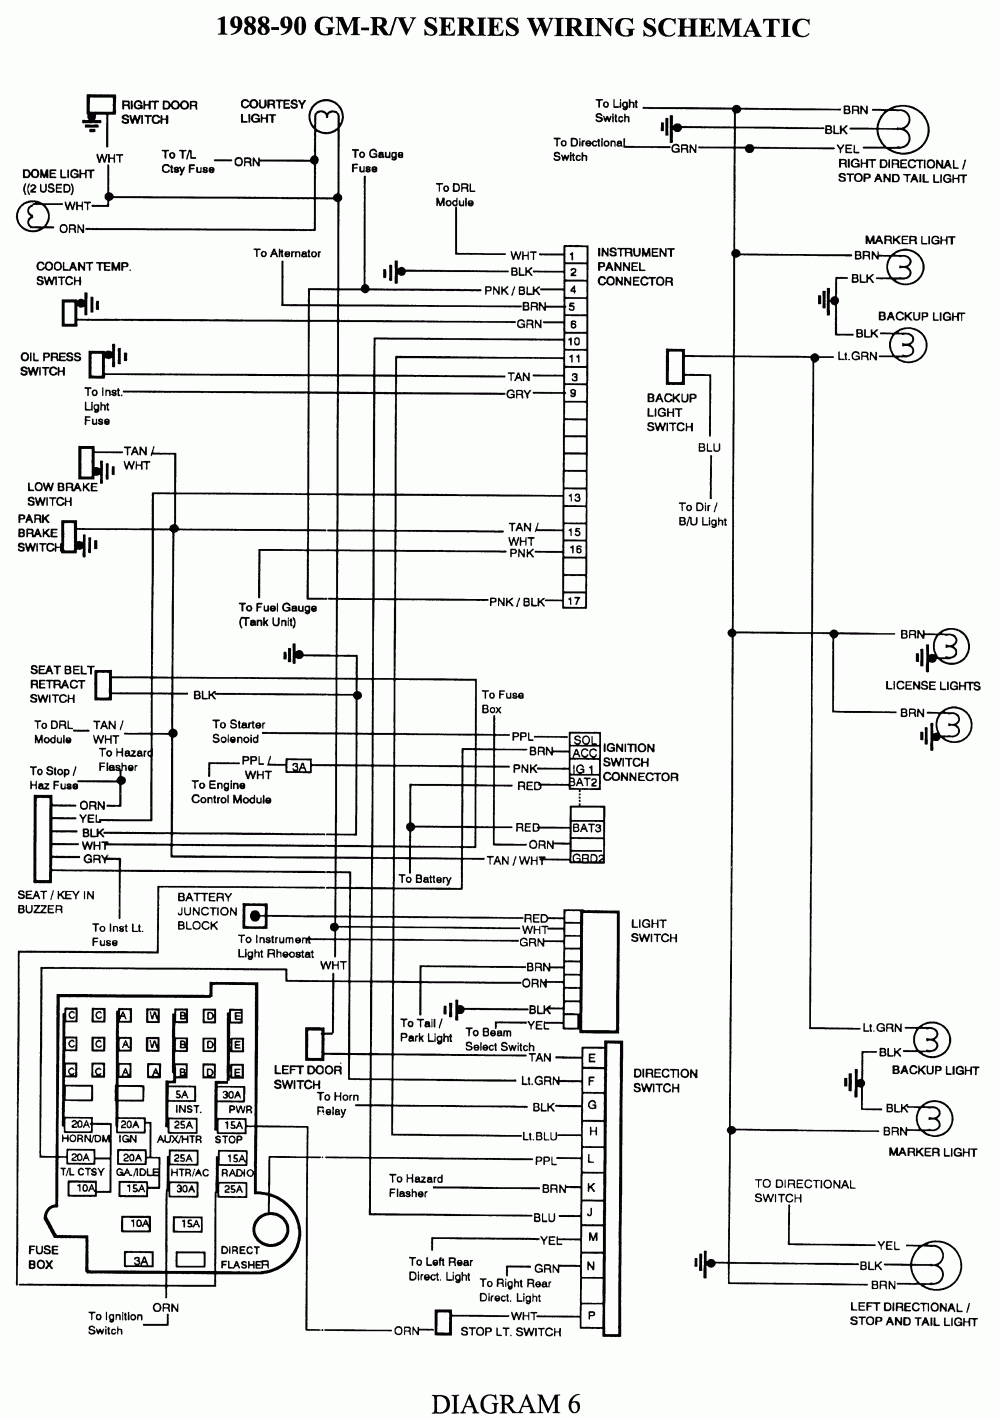 Wiring Diagram For 1998 Chevy Silverado - Wiring Diagram Data Oreo - 1998 Chevy Silverado Wiring Diagram